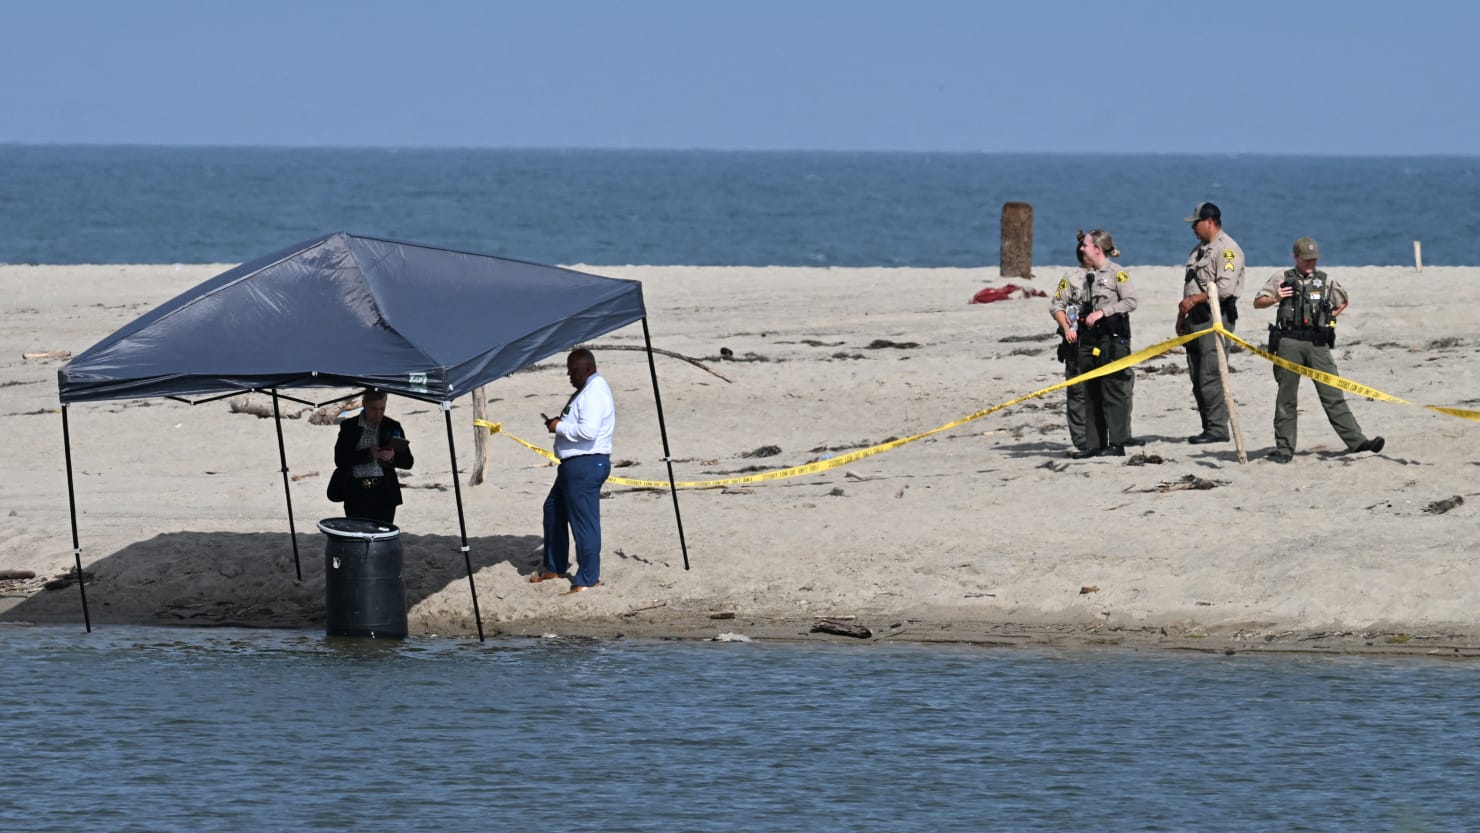 Naked Body Found Stuffed Inside Barrel by Malibu Lifeguard Identified picture